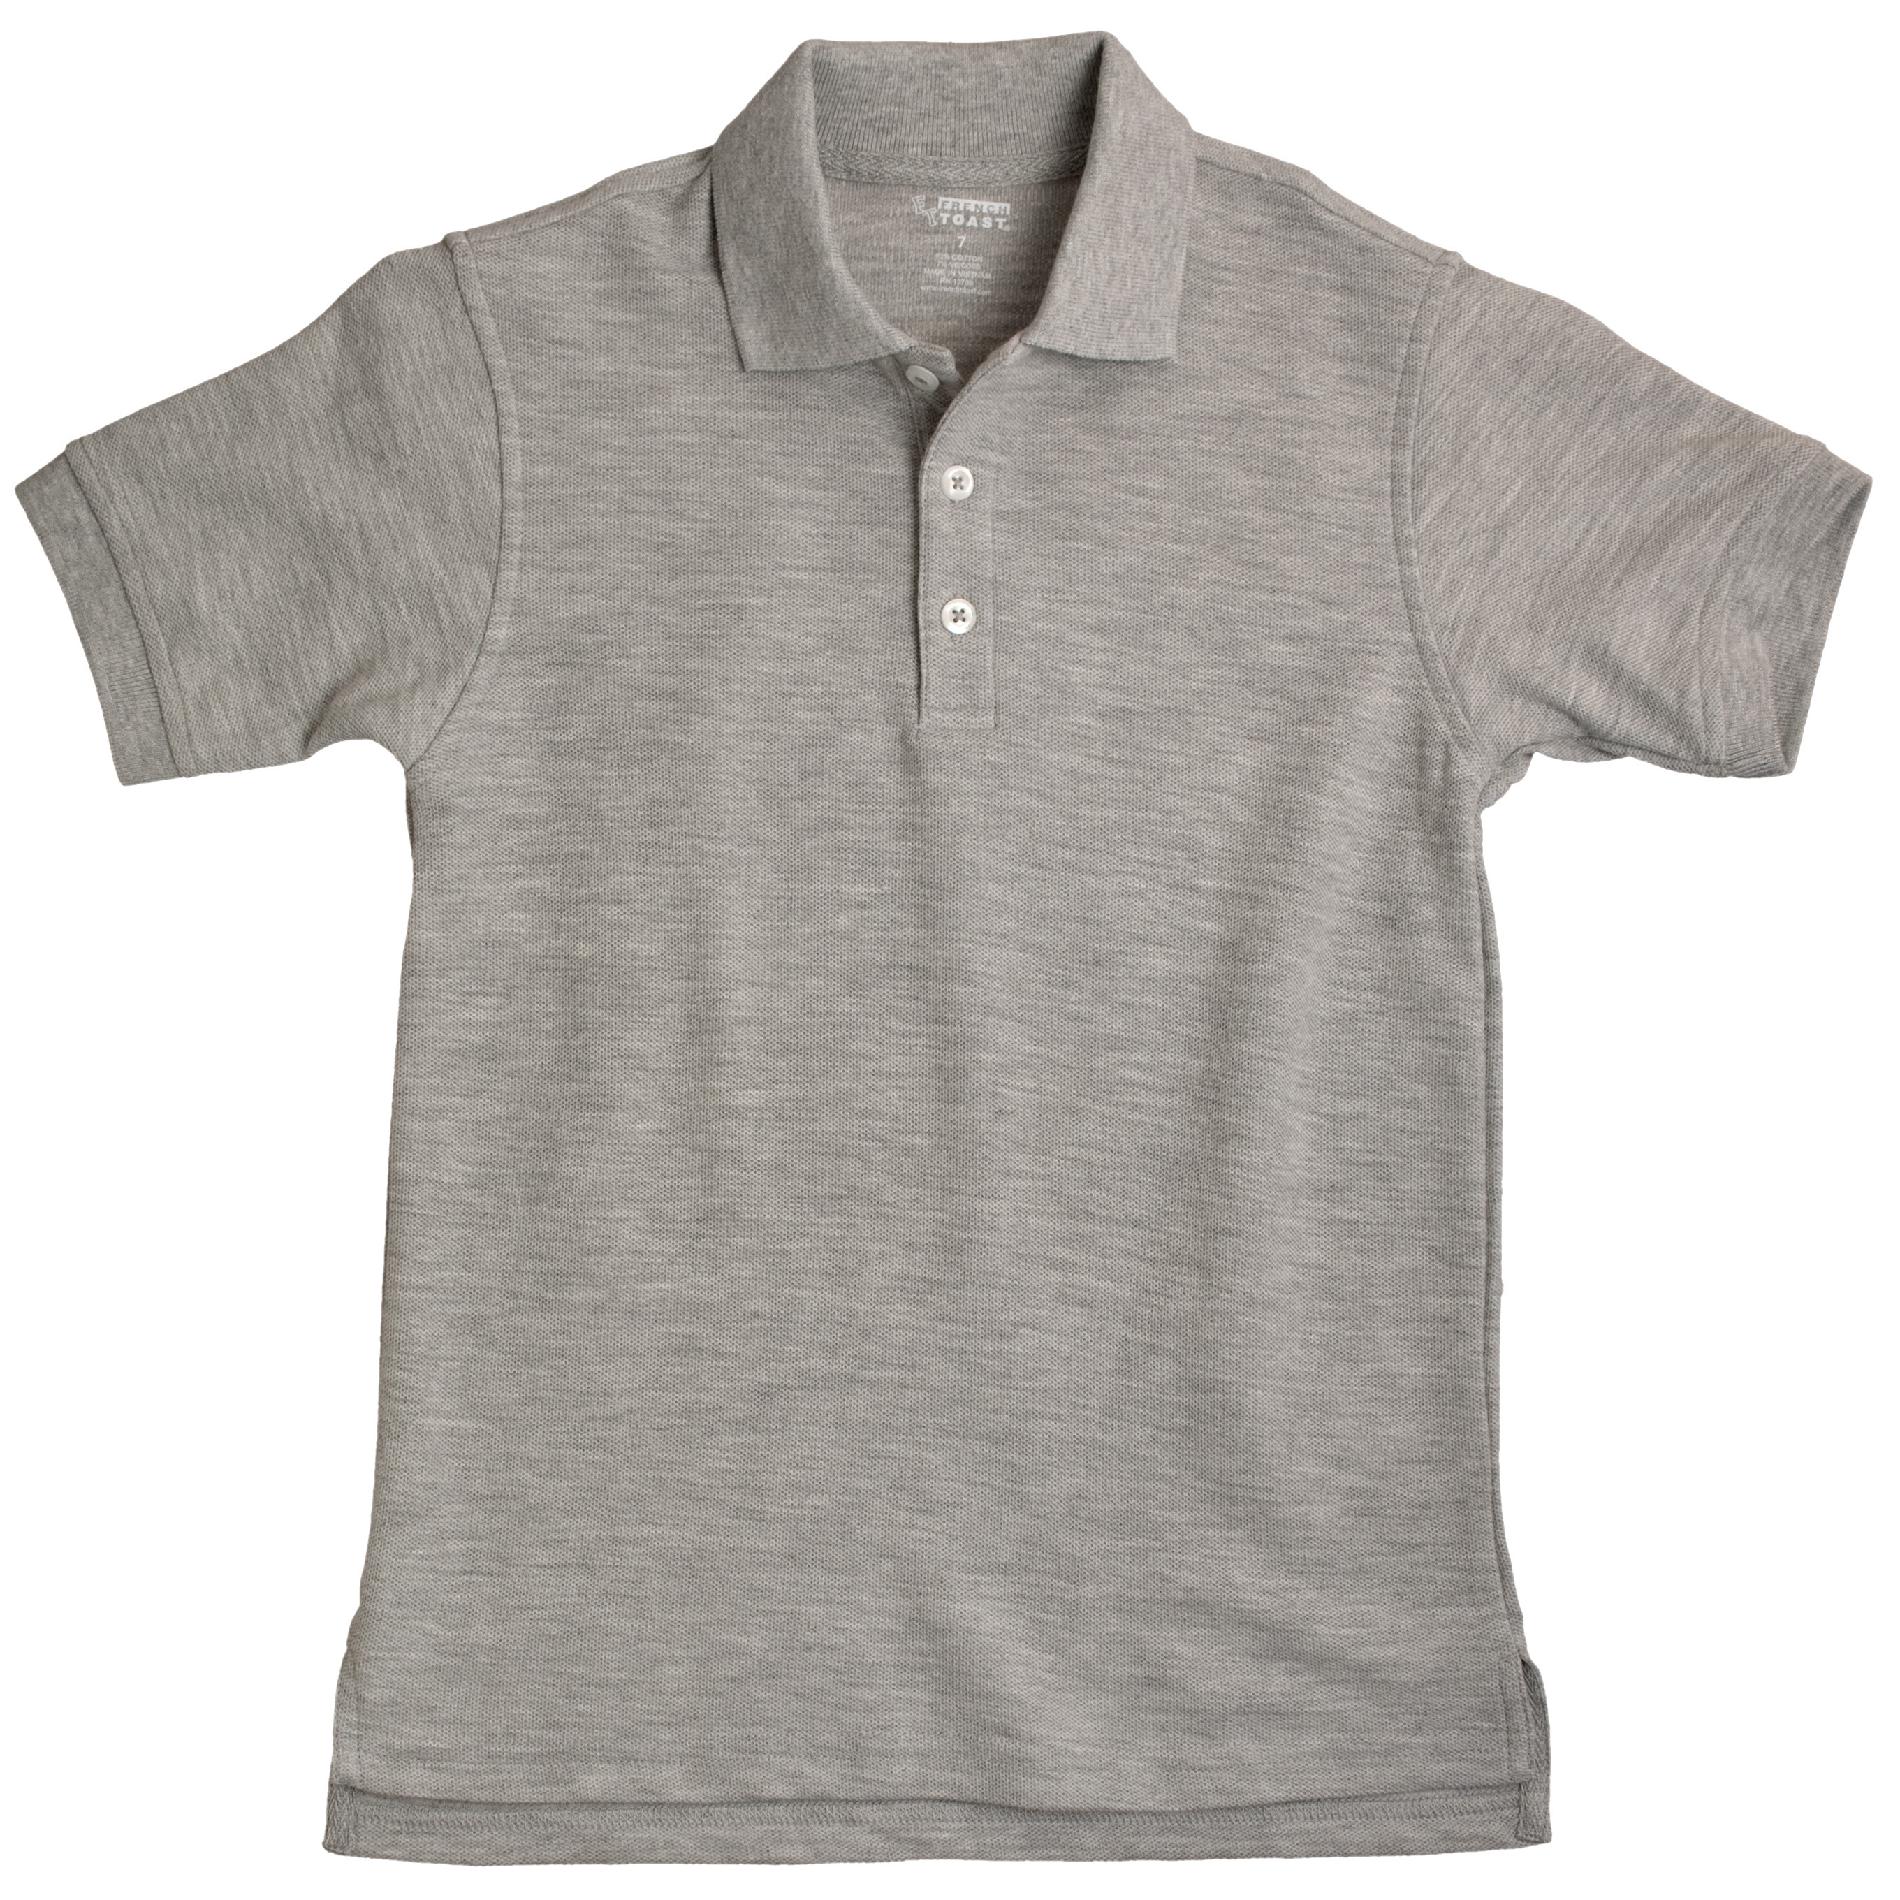 Unisex Teen Short Sleeve Pique Polo Shirt